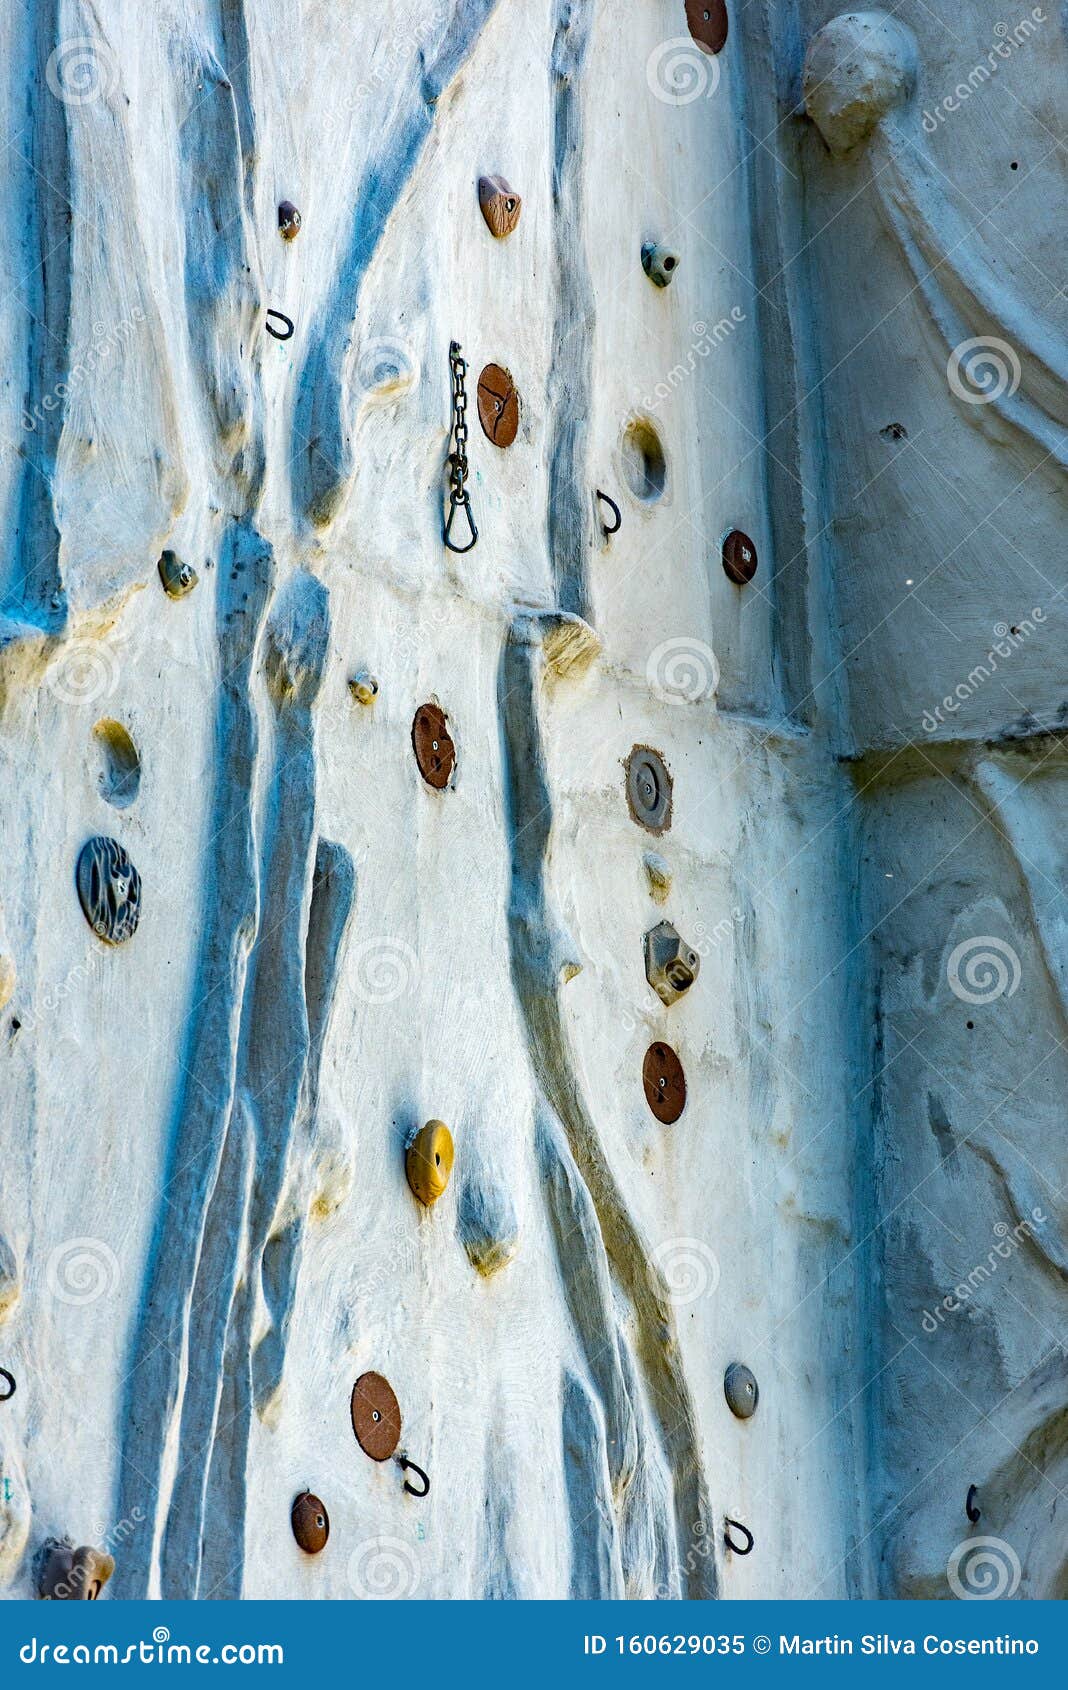 close up photo of a rock climbing wall.